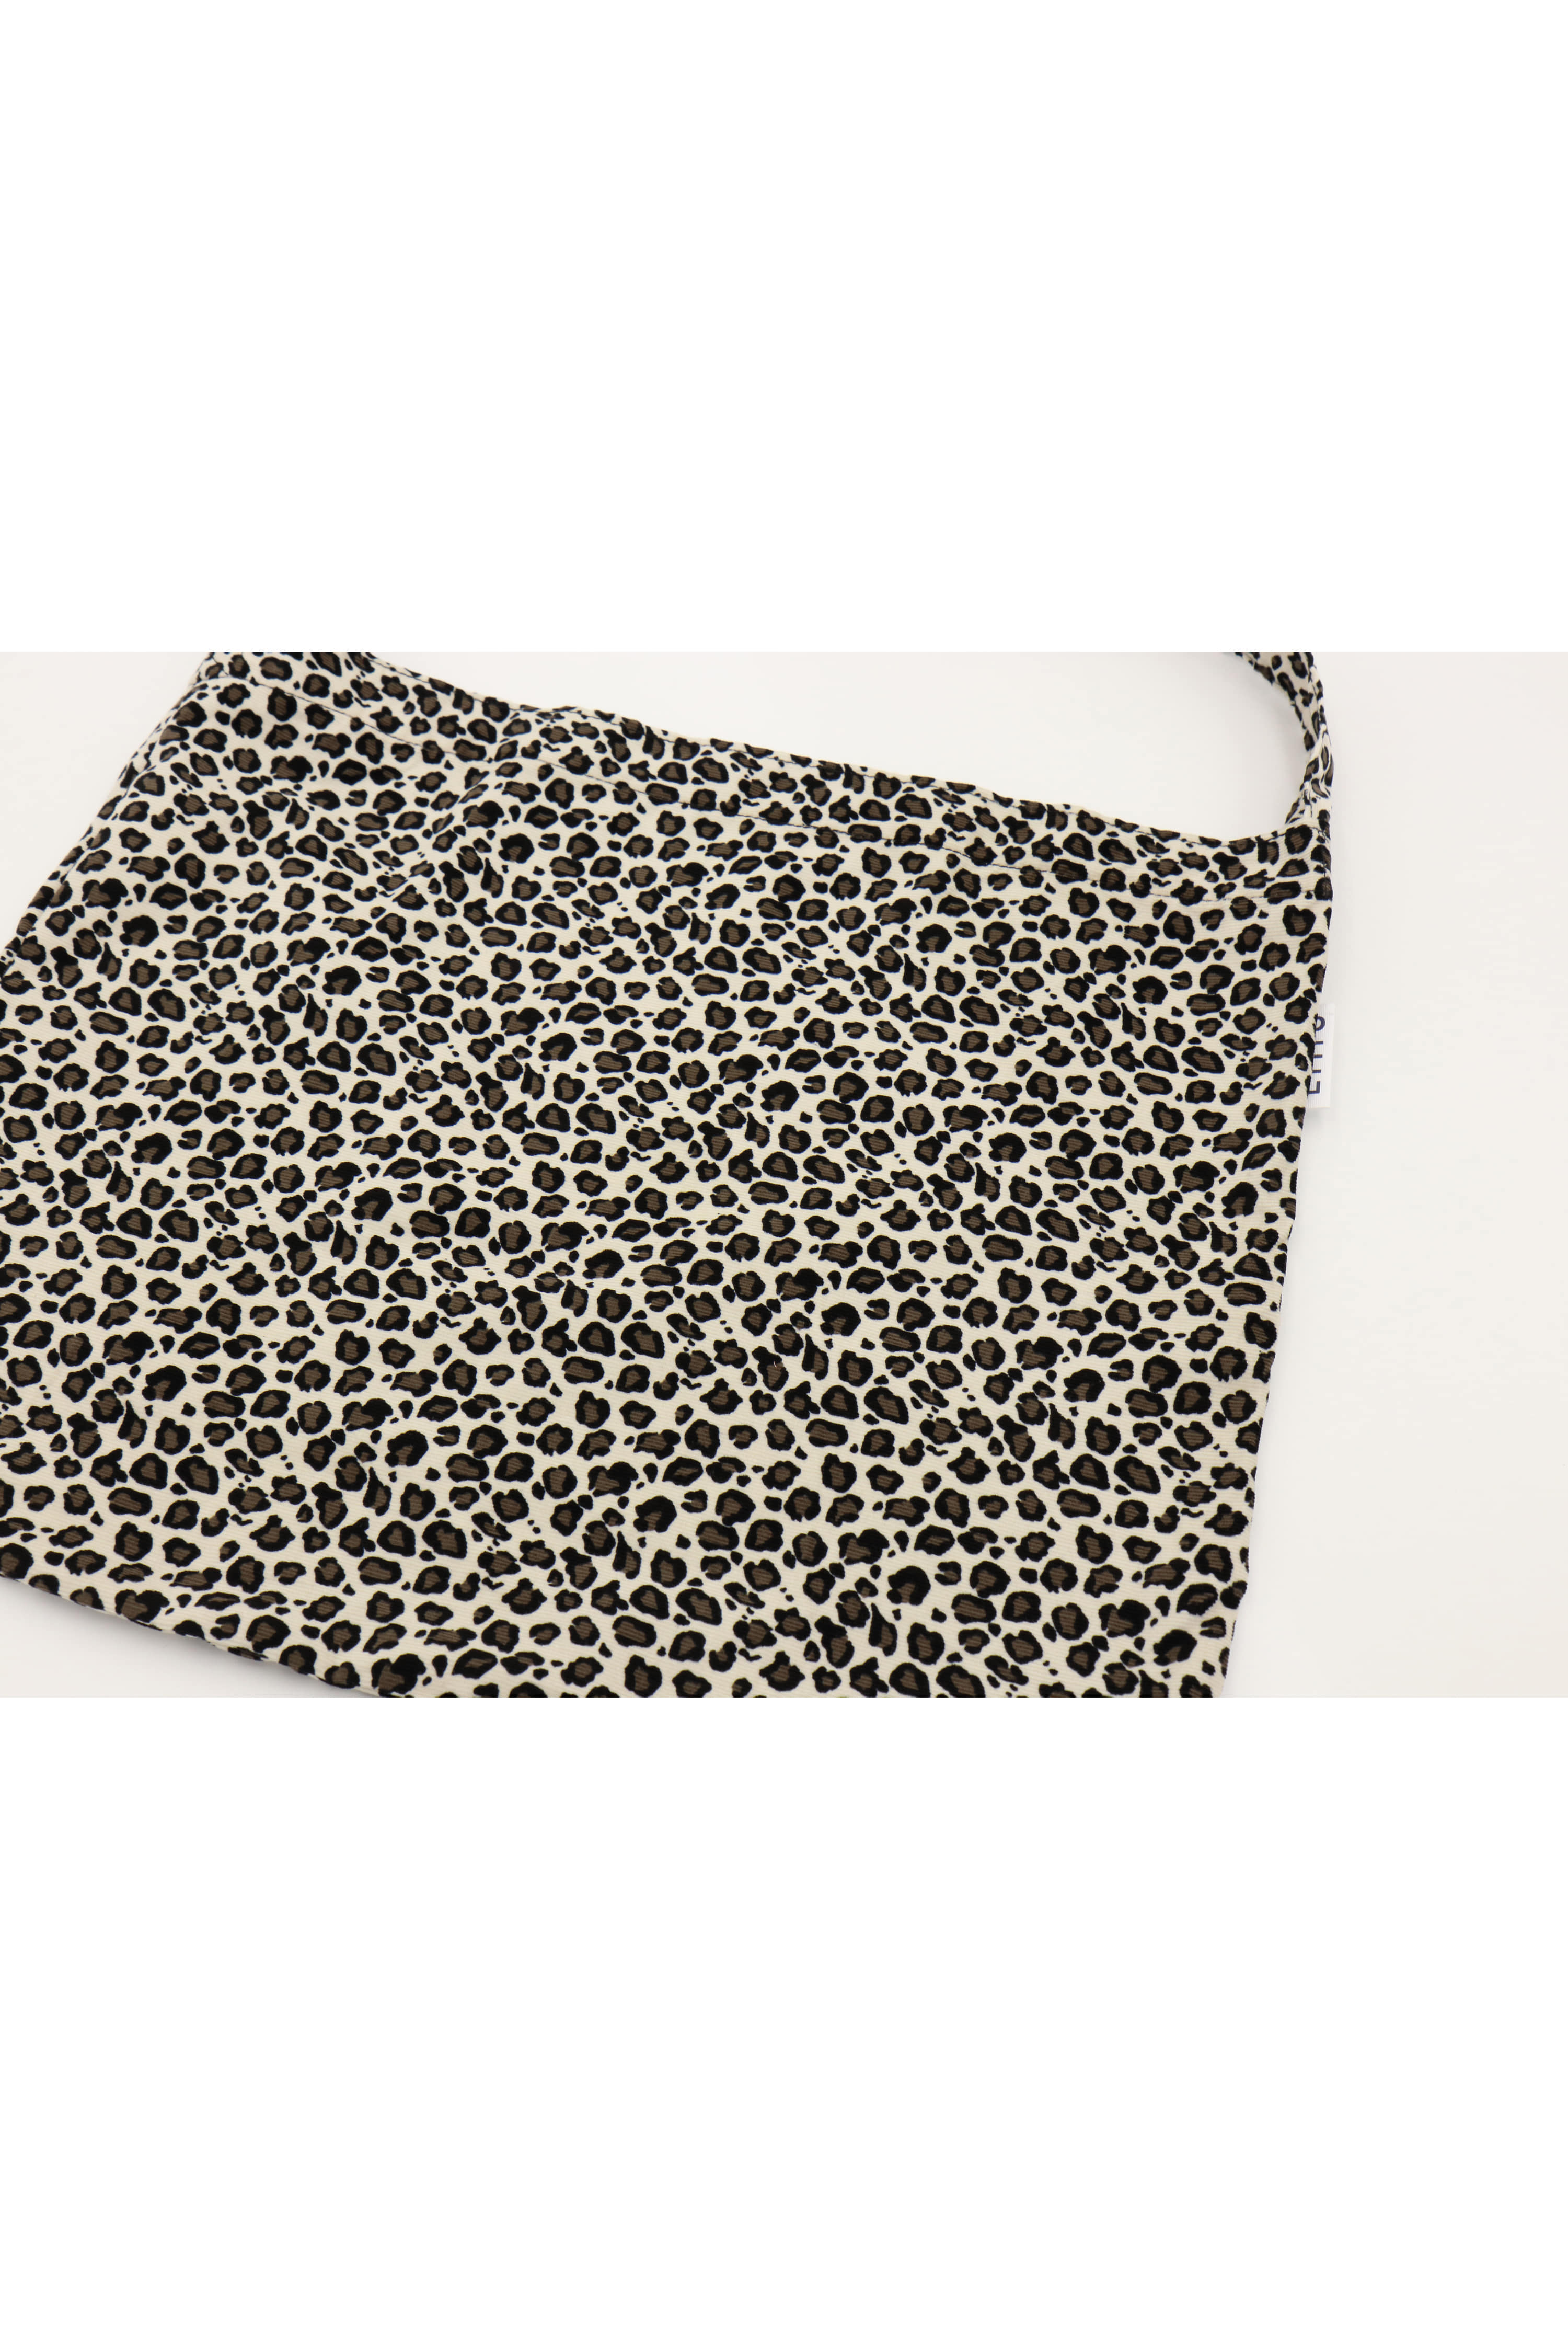 White Leopard Eco Bag(Corduroy)